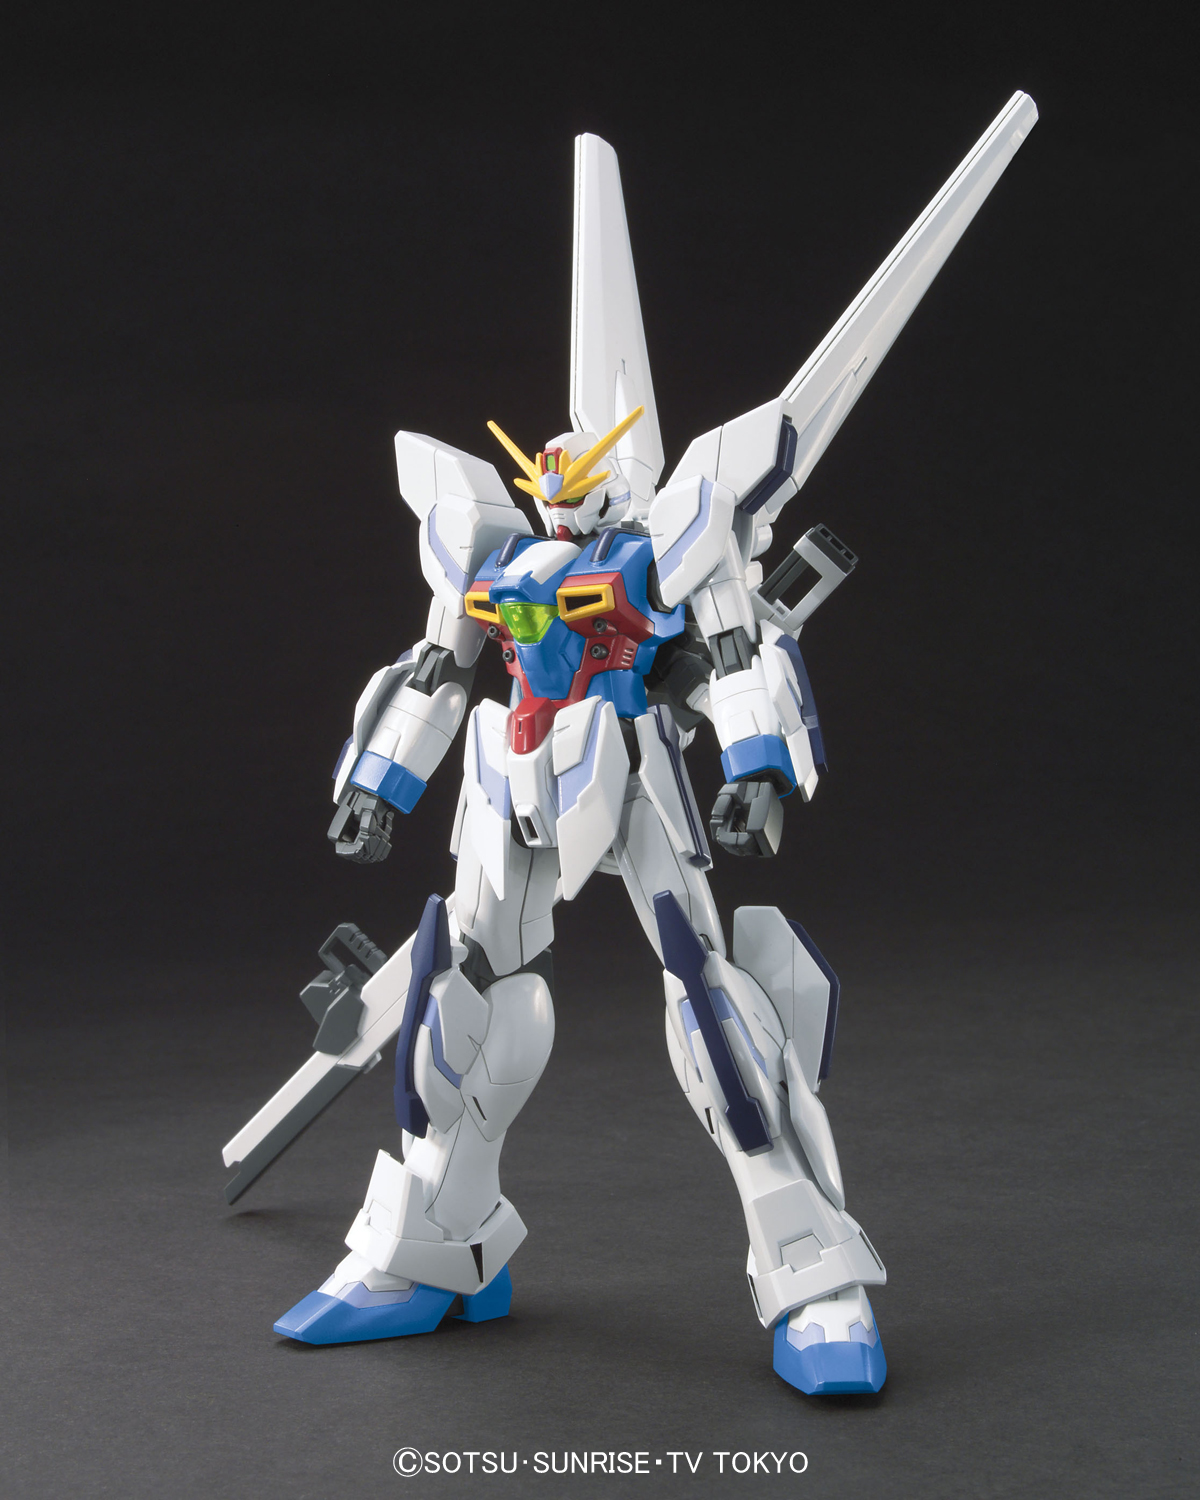 3198HGBF 1/144 GX-9999 ガンダムX魔王 [Gundam X Maoh] 0185146 5058786